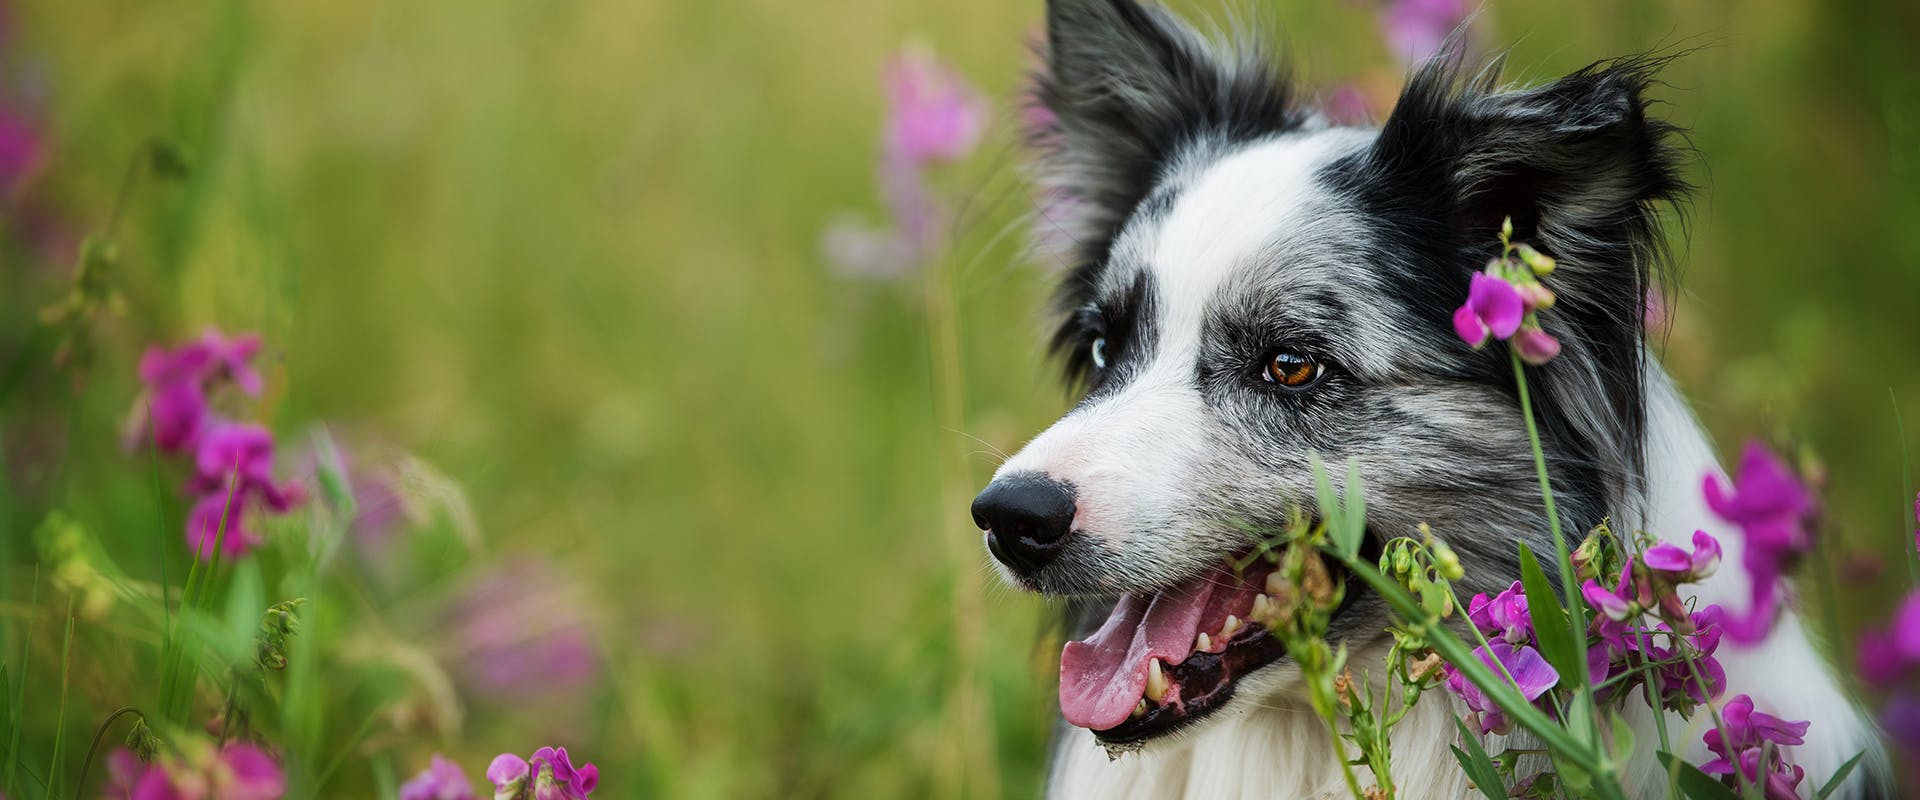 A dog sitting amongst sweet pea flowers